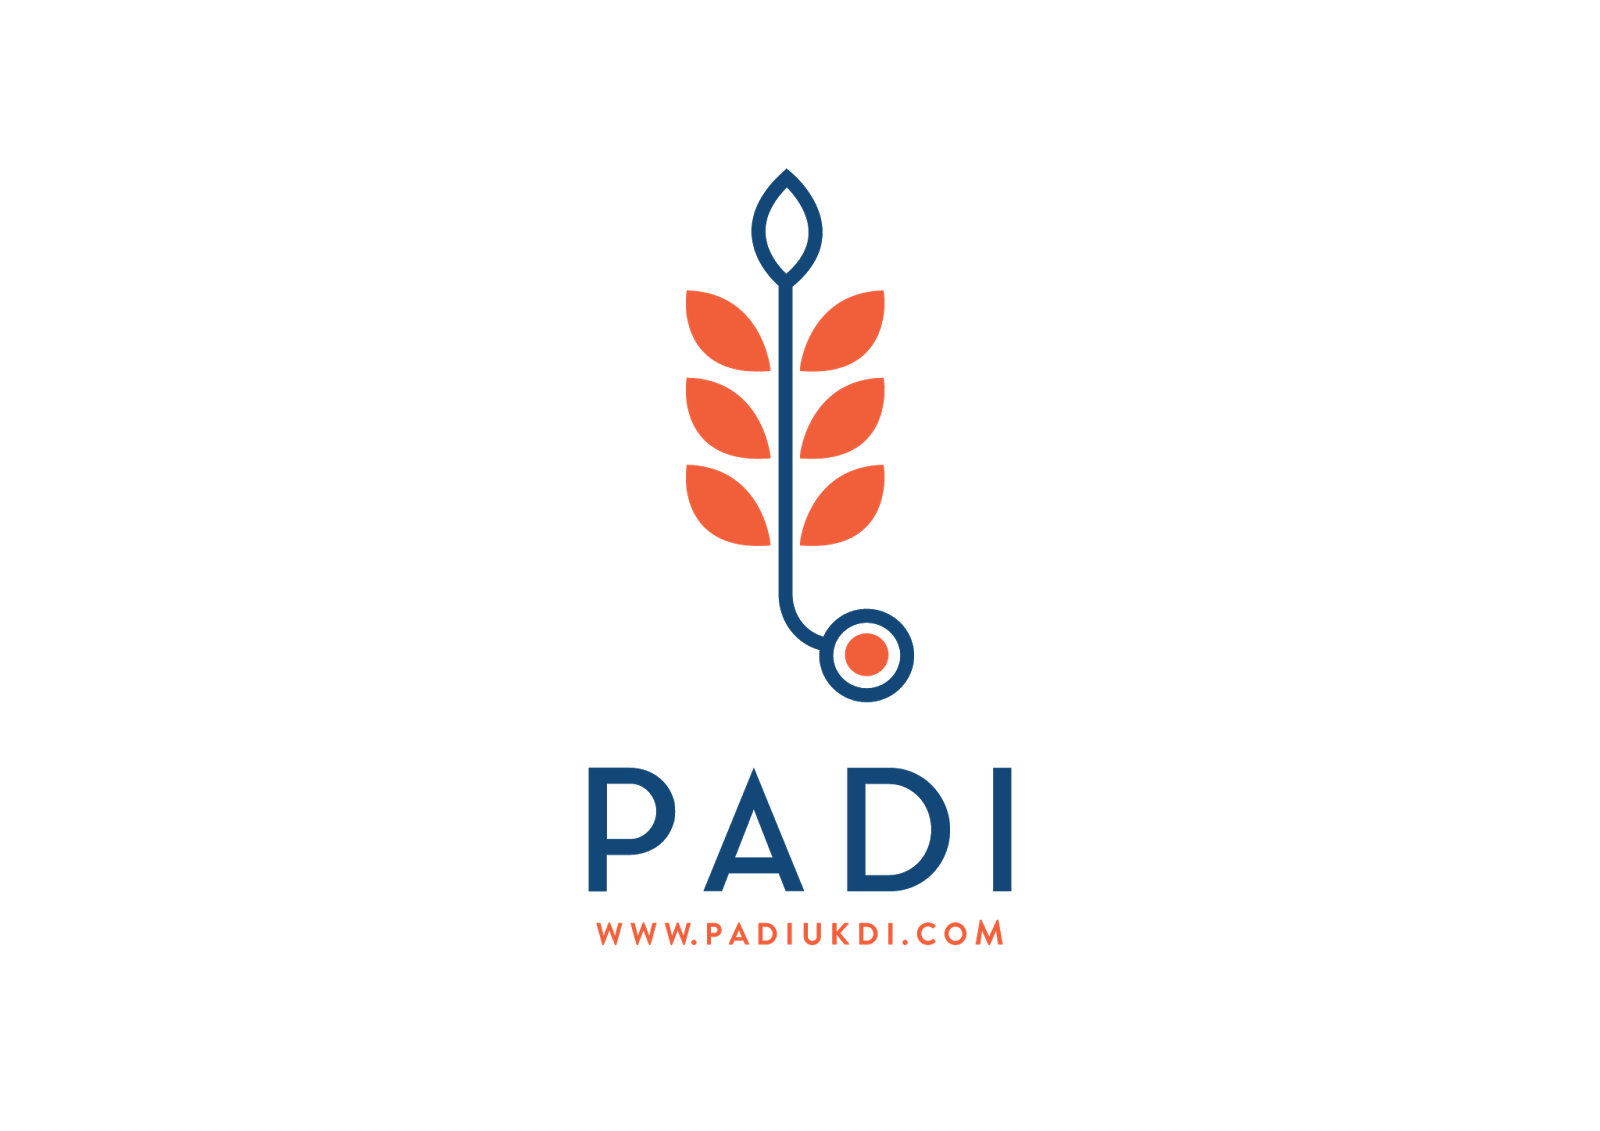 logo padi - wood scribd indo